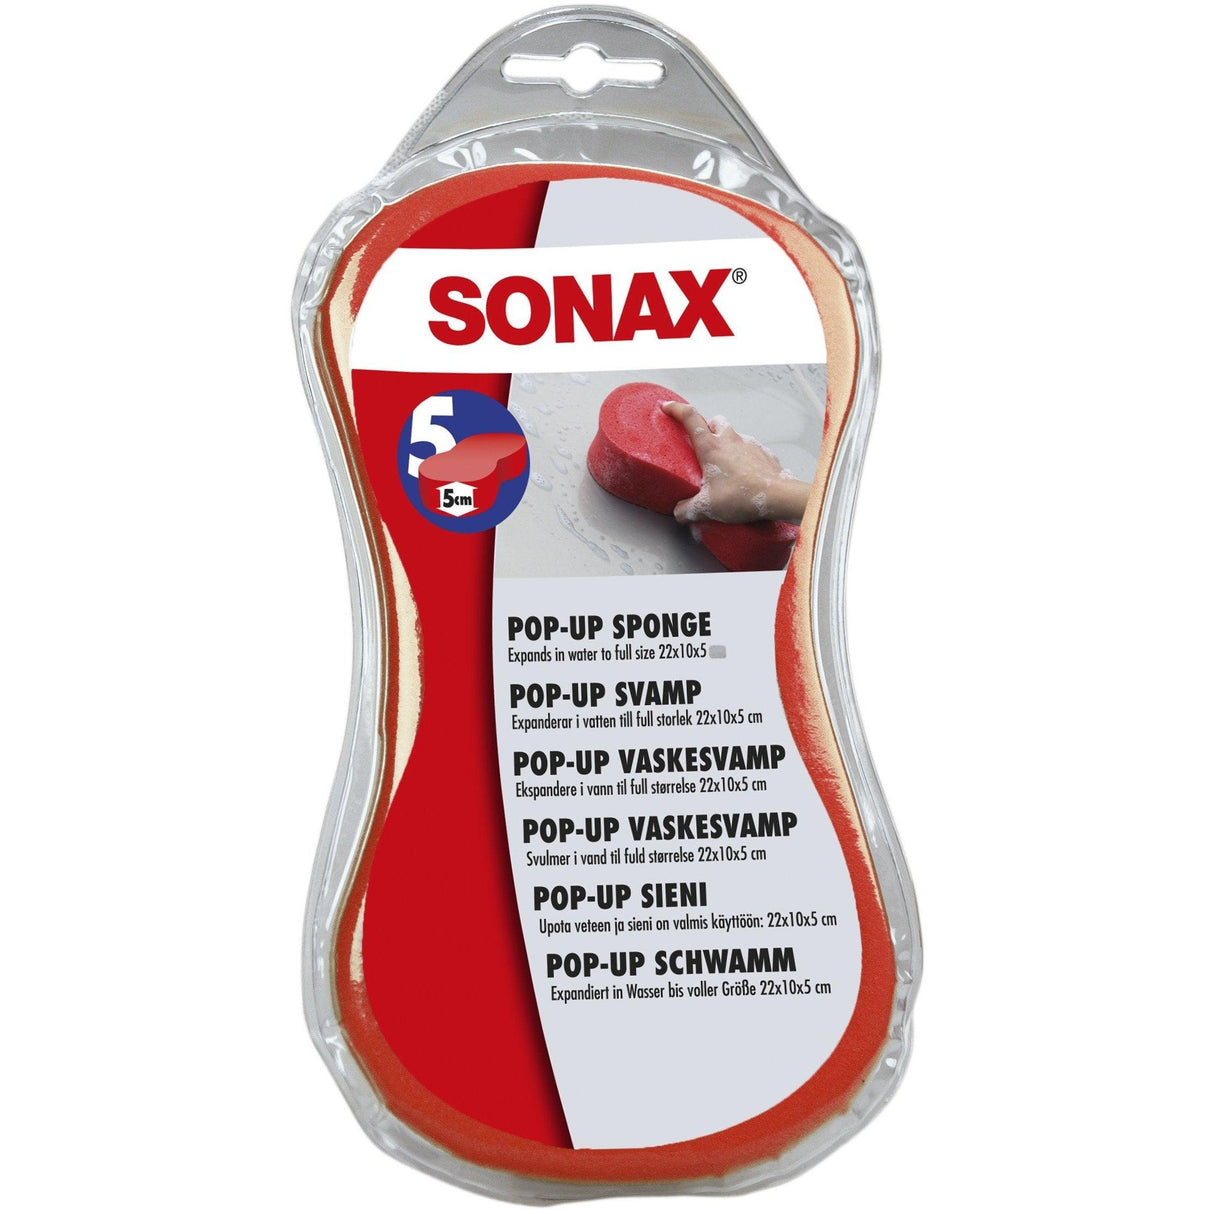 SONAX Vaskesvamp Pop-Up - Xpert Cleaning